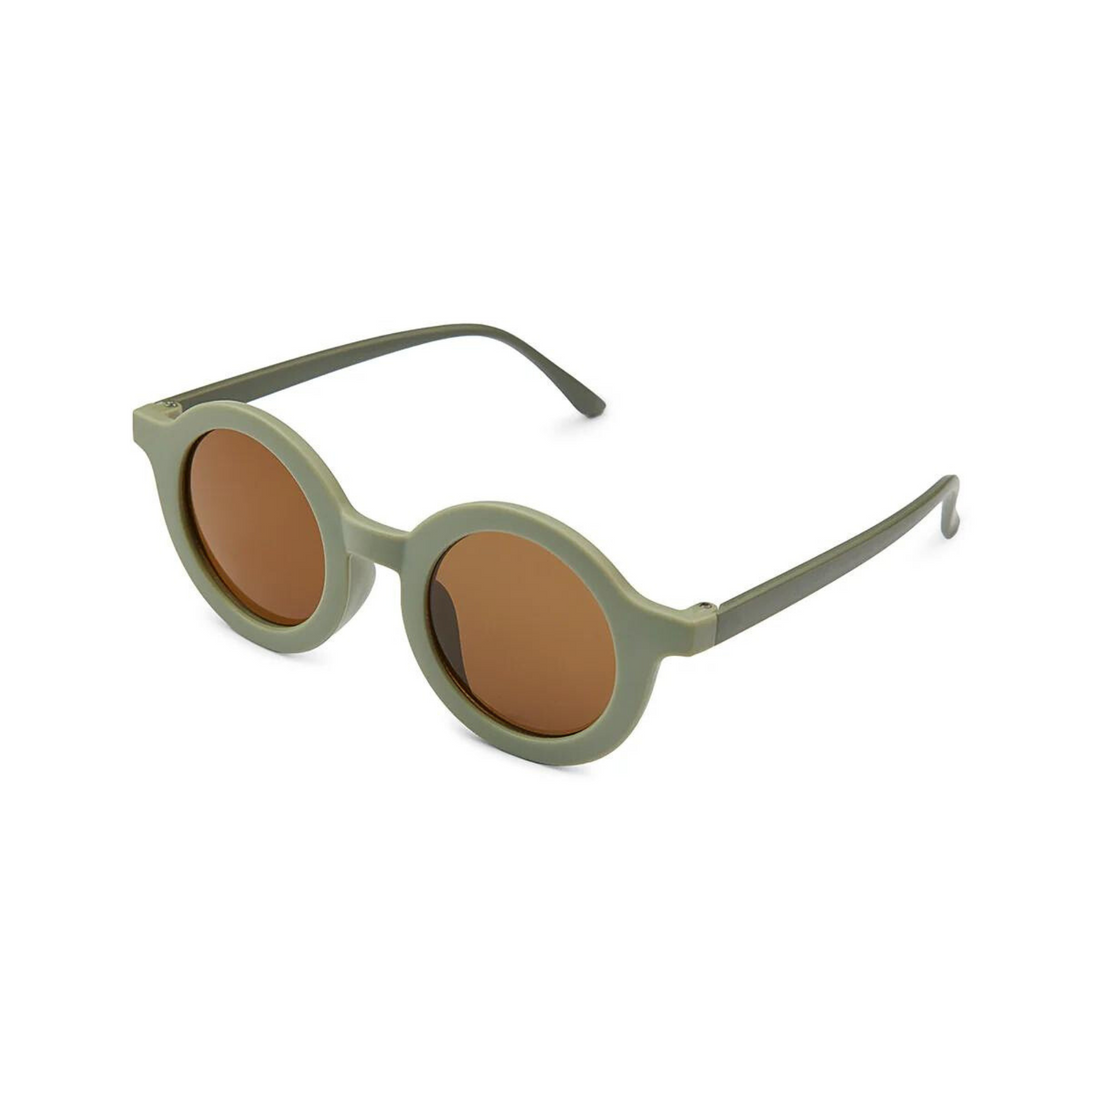 Sunglasses - Dusty green 